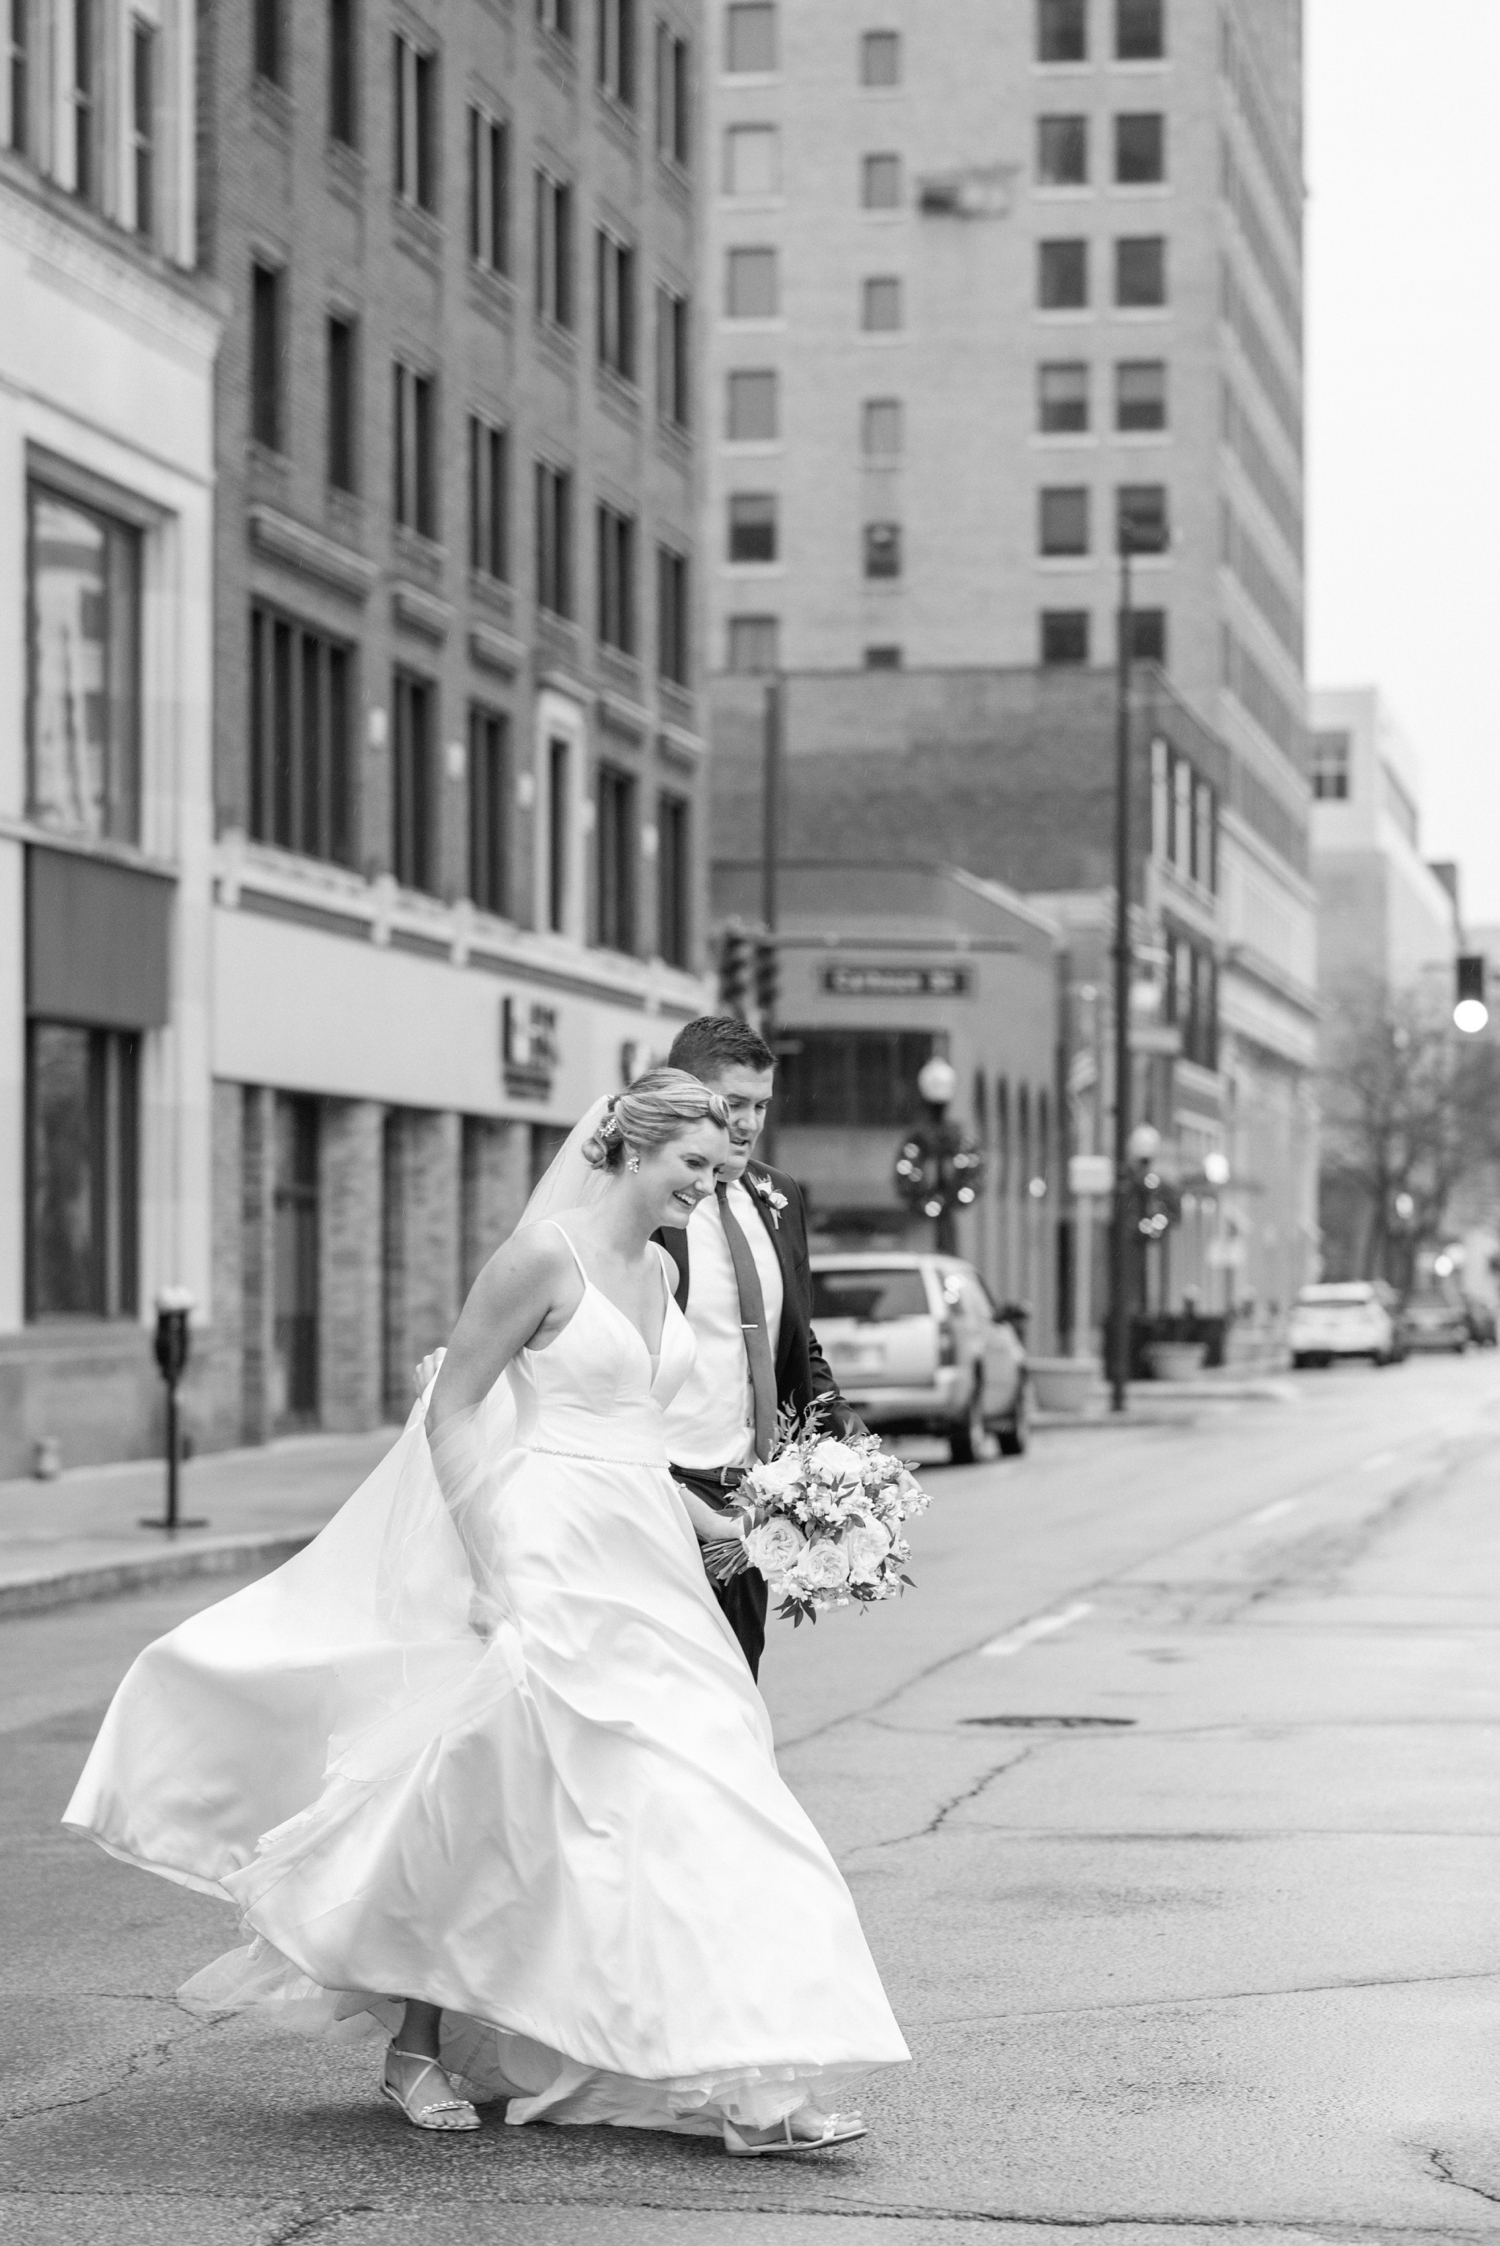 Indiana Wedding Inspiration and Bride and Groom photos by For Wayne Indianapolis Indiana wedding photographer Rose Courts Photography #brideandgroom #weddingphotography 